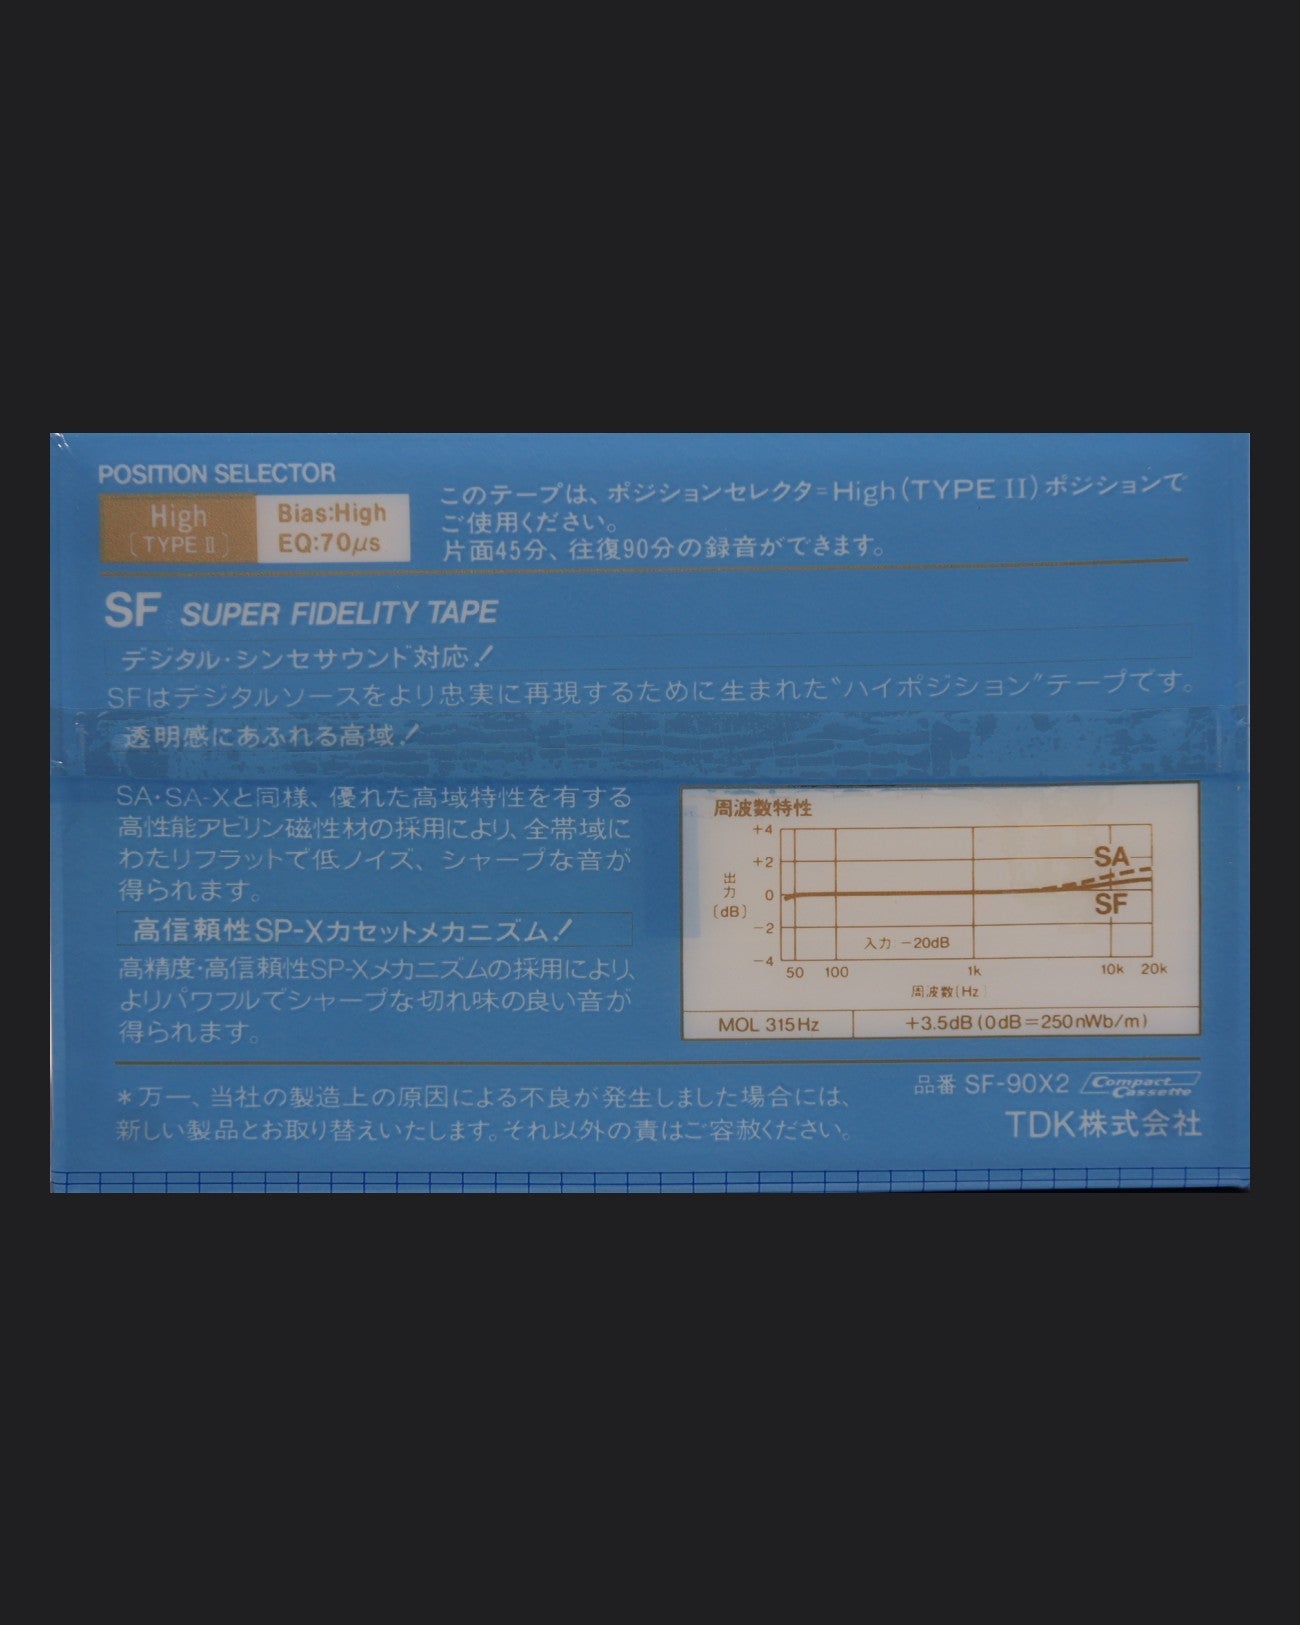 TDK SF (1985-1986 JP) Ultra Ferric